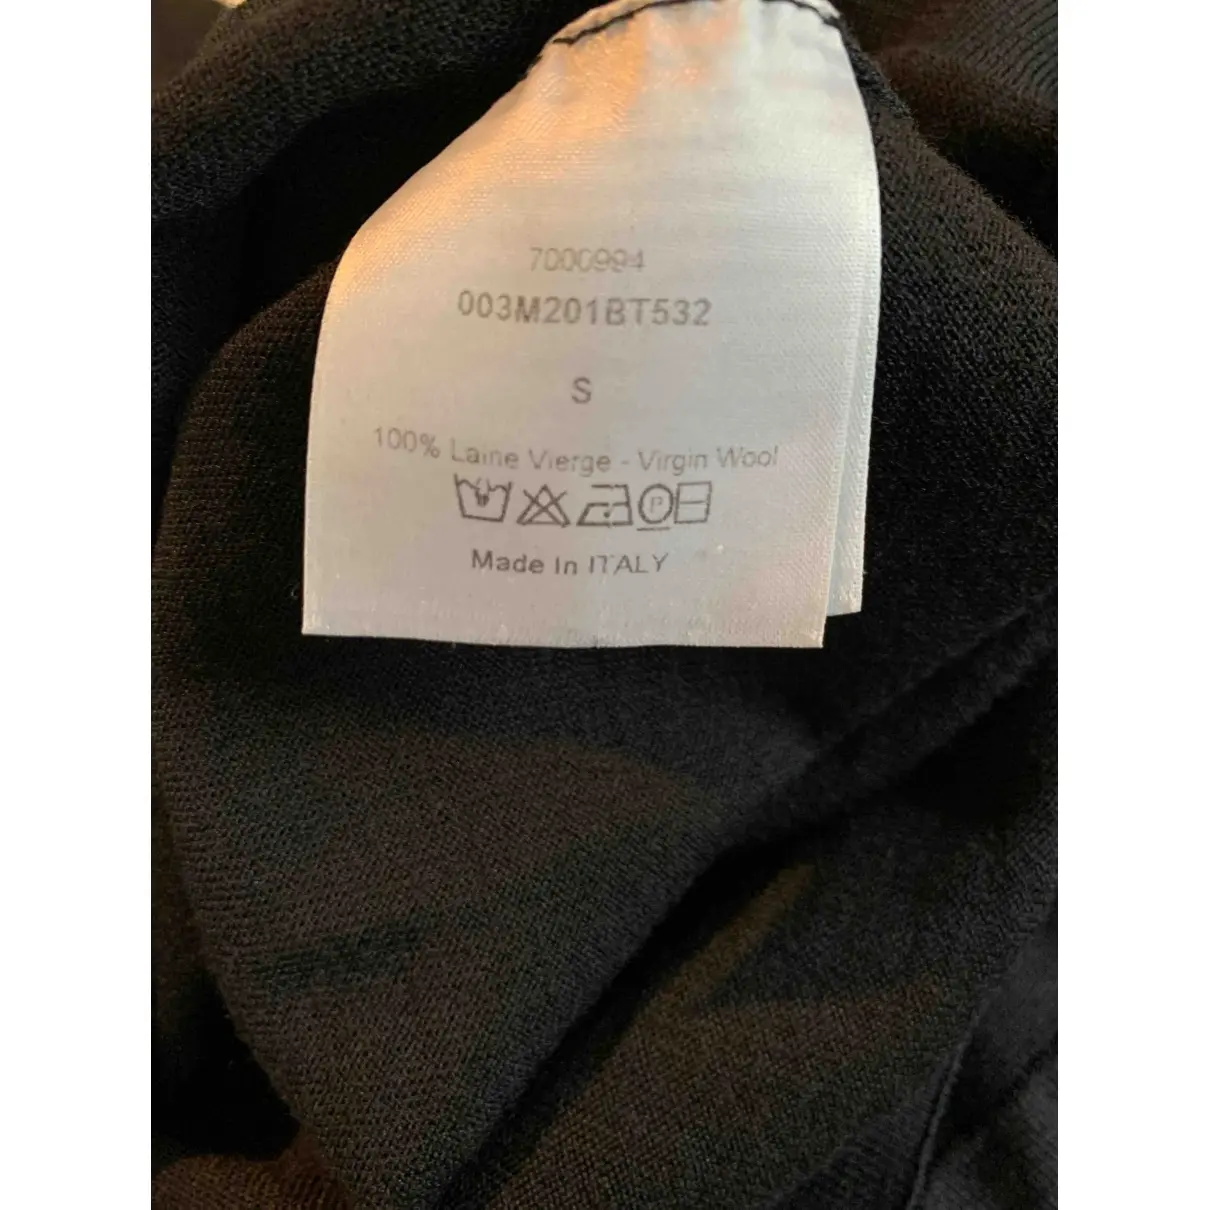 Buy Dior Homme Wool vest online